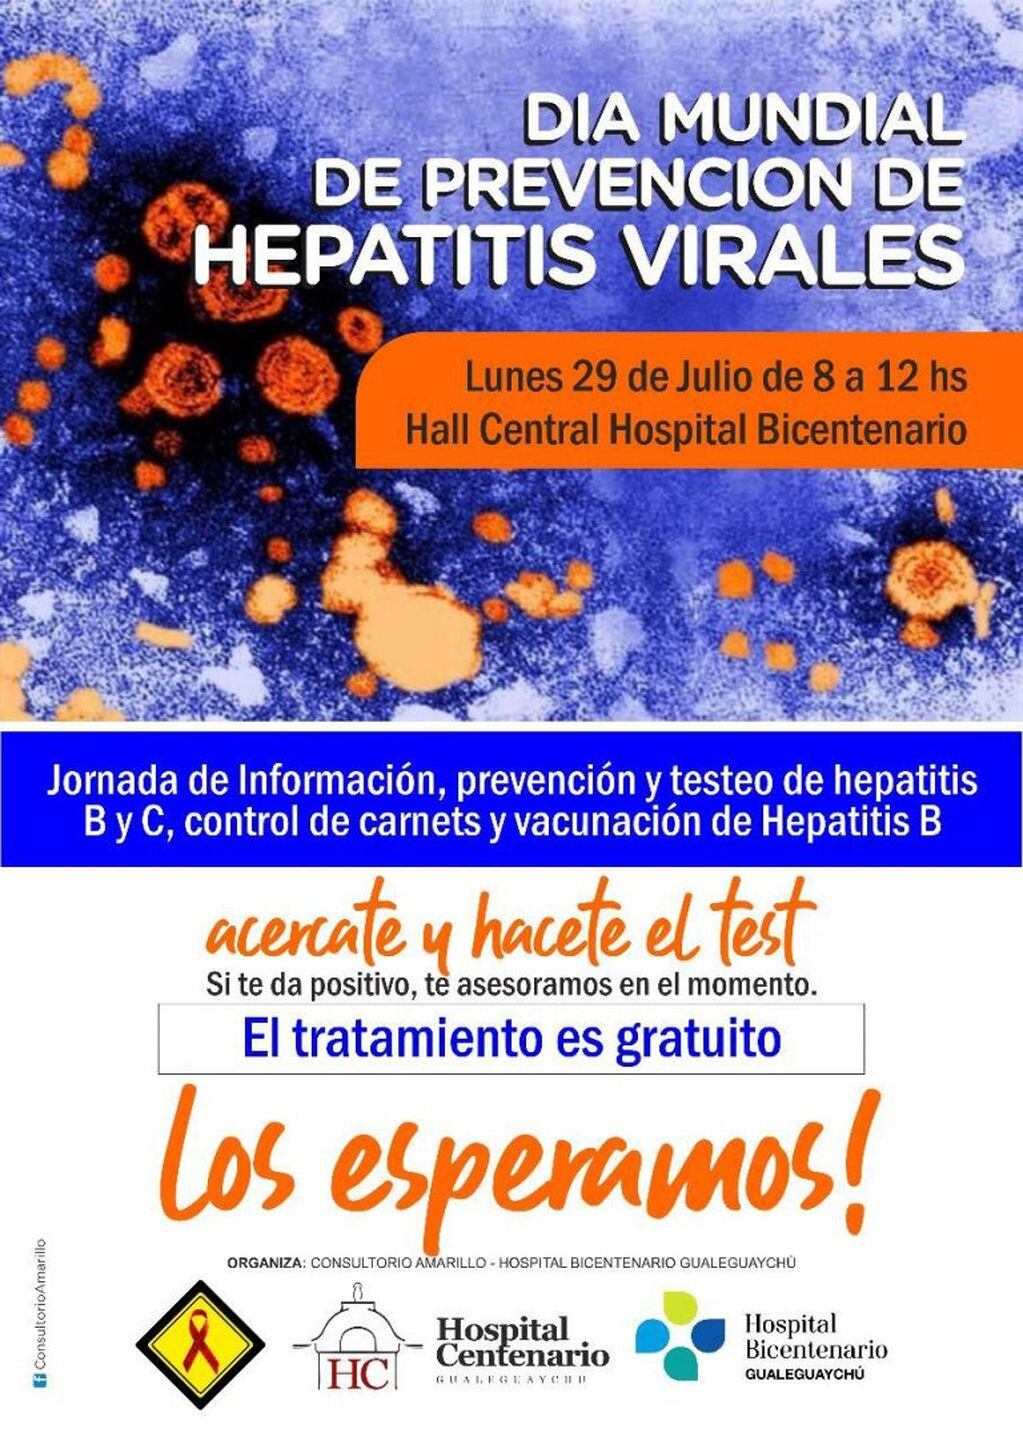 Jornada de testeo "HEPATITIS"
Crédito: H-C